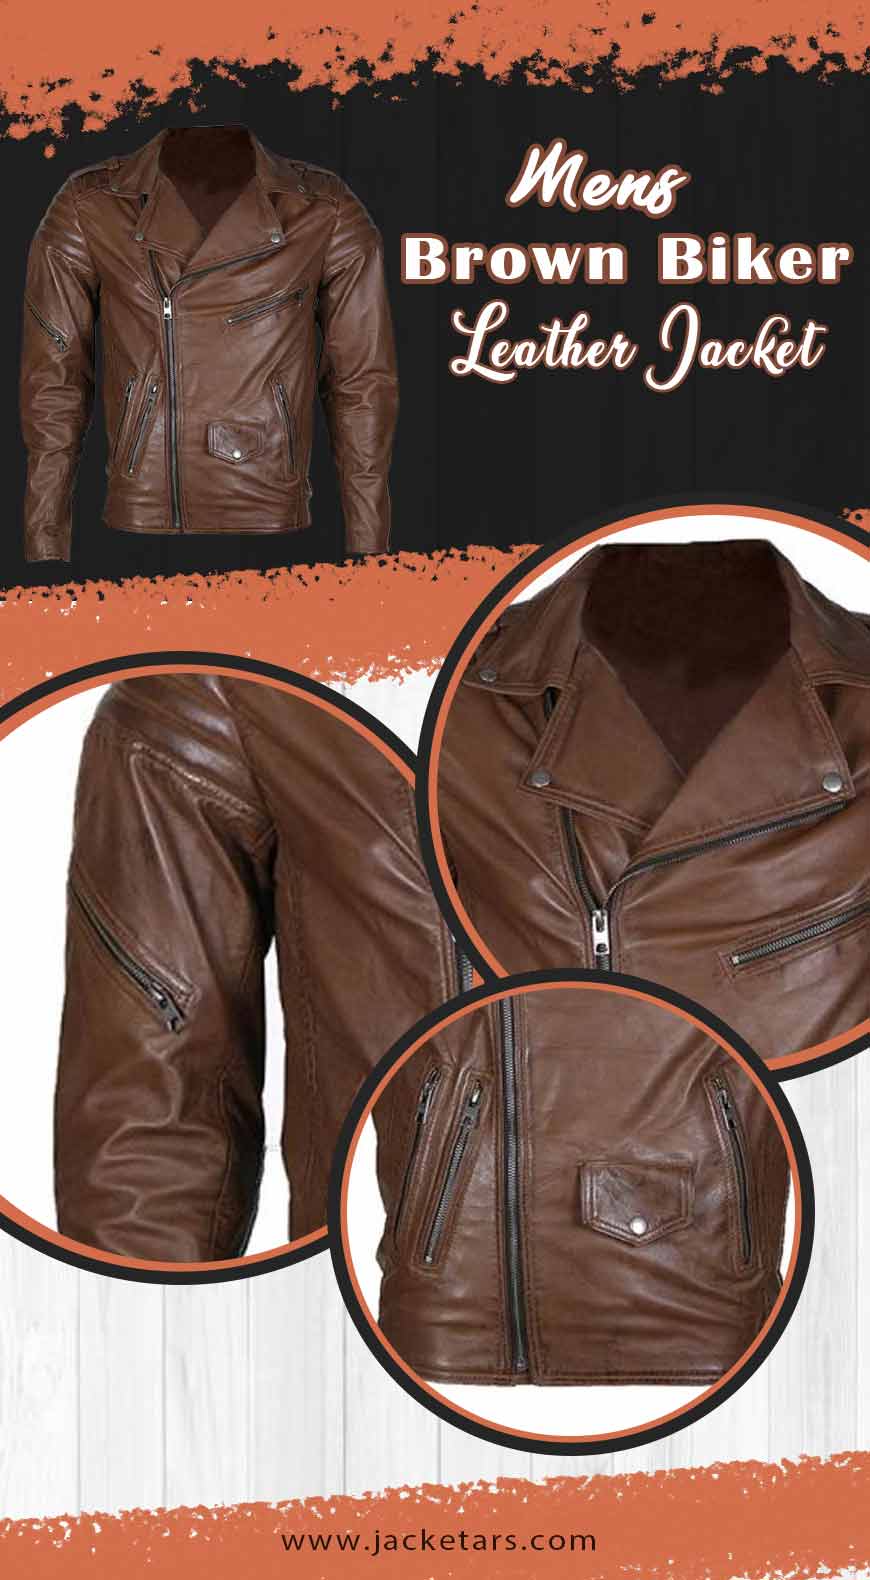 Mens Brown Biker Leather Jacket info